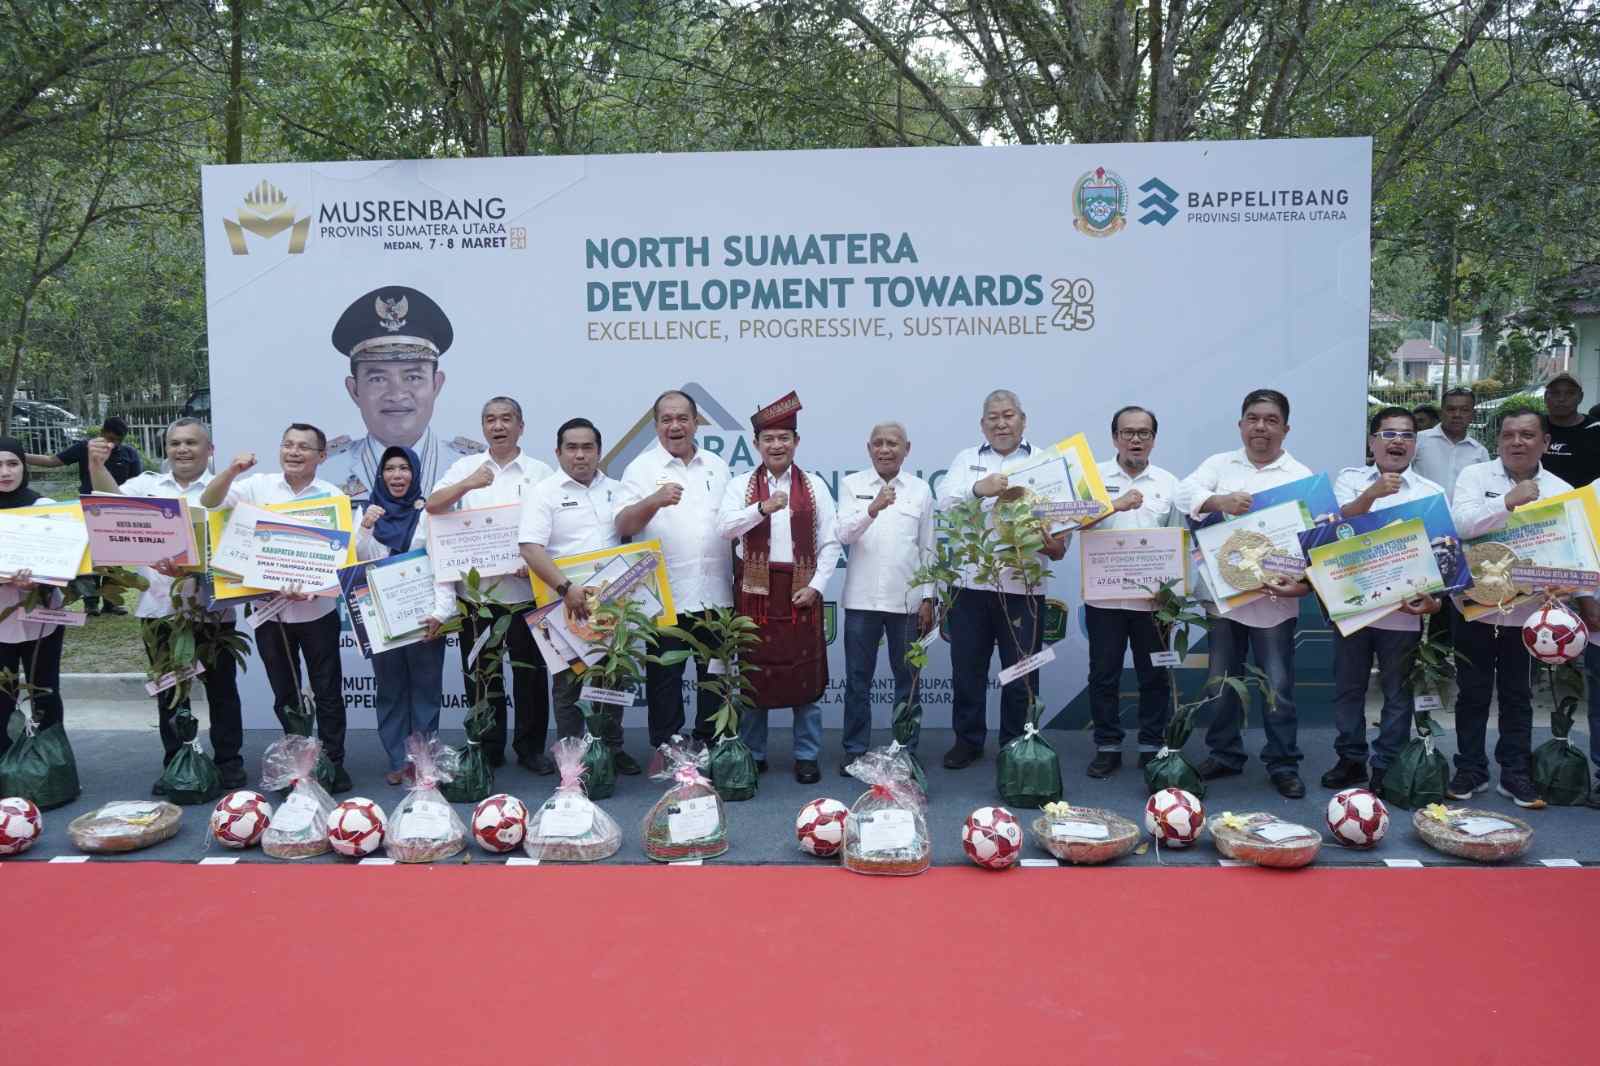 Bupati Asahan Dampingi Pj Gubernur Sumatera Utara Tanam Cabai di Desa Serdang